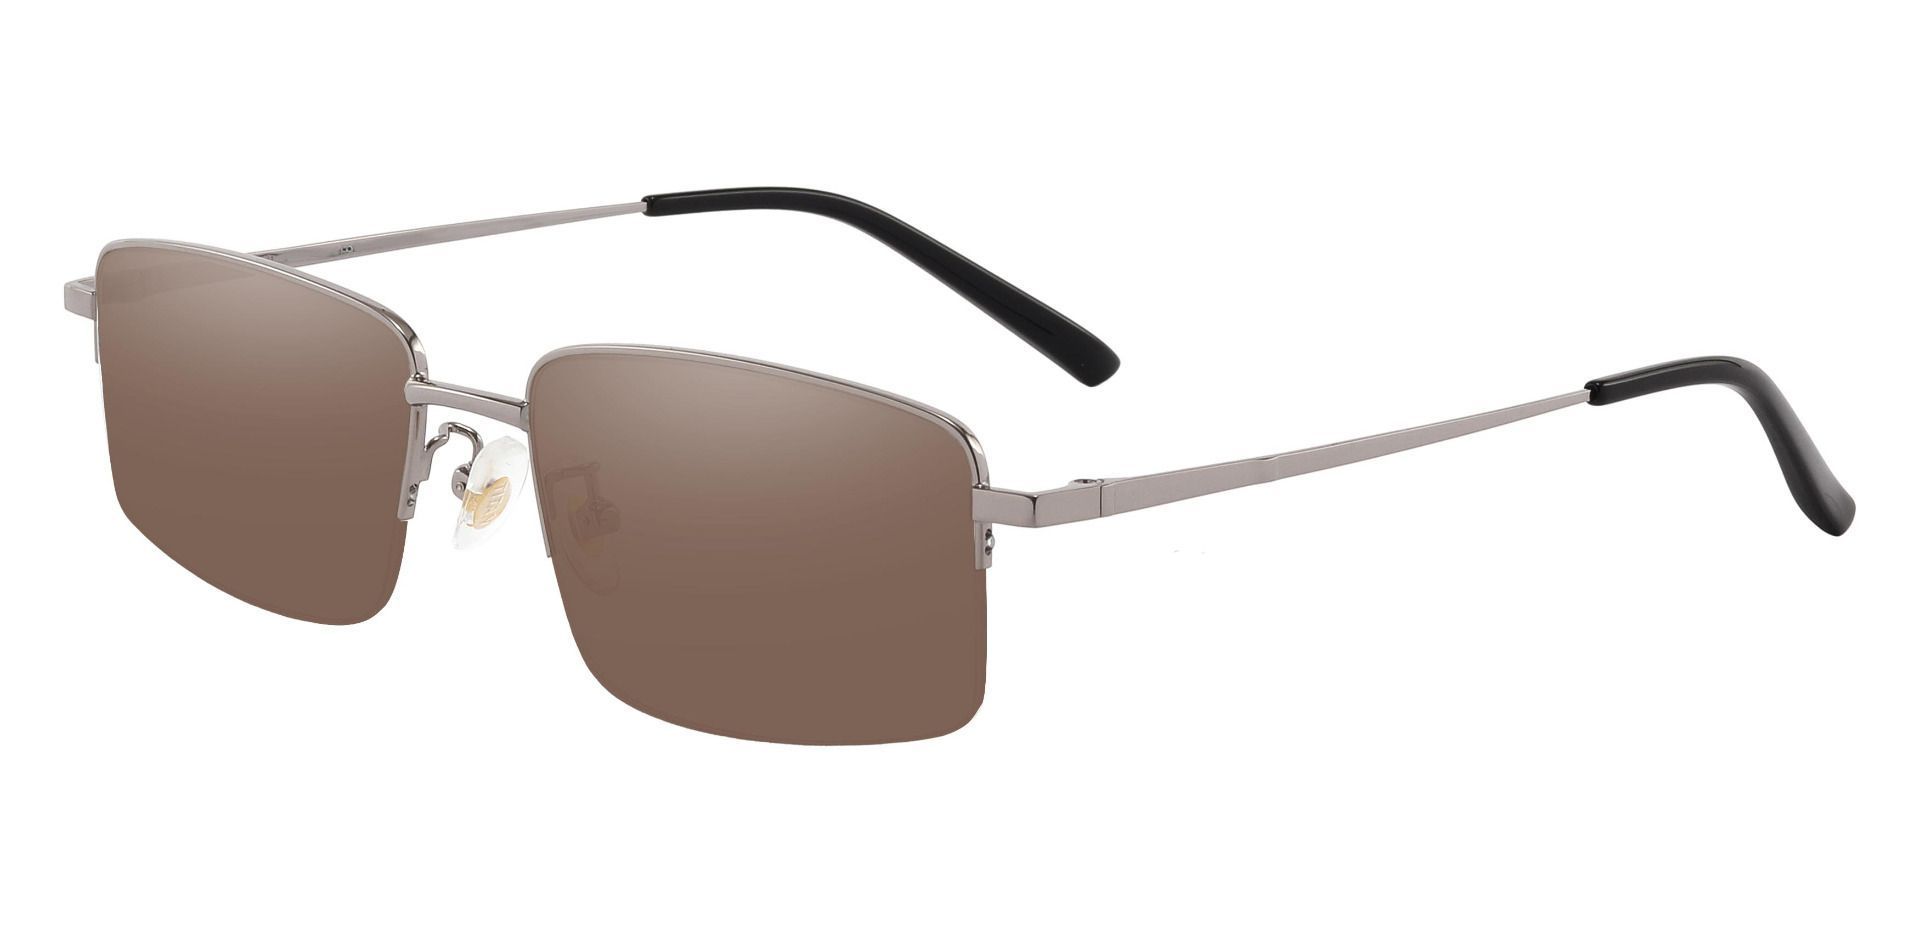 Wayne Rectangle Progressive Sunglasses - Gray Frame With Brown Lenses